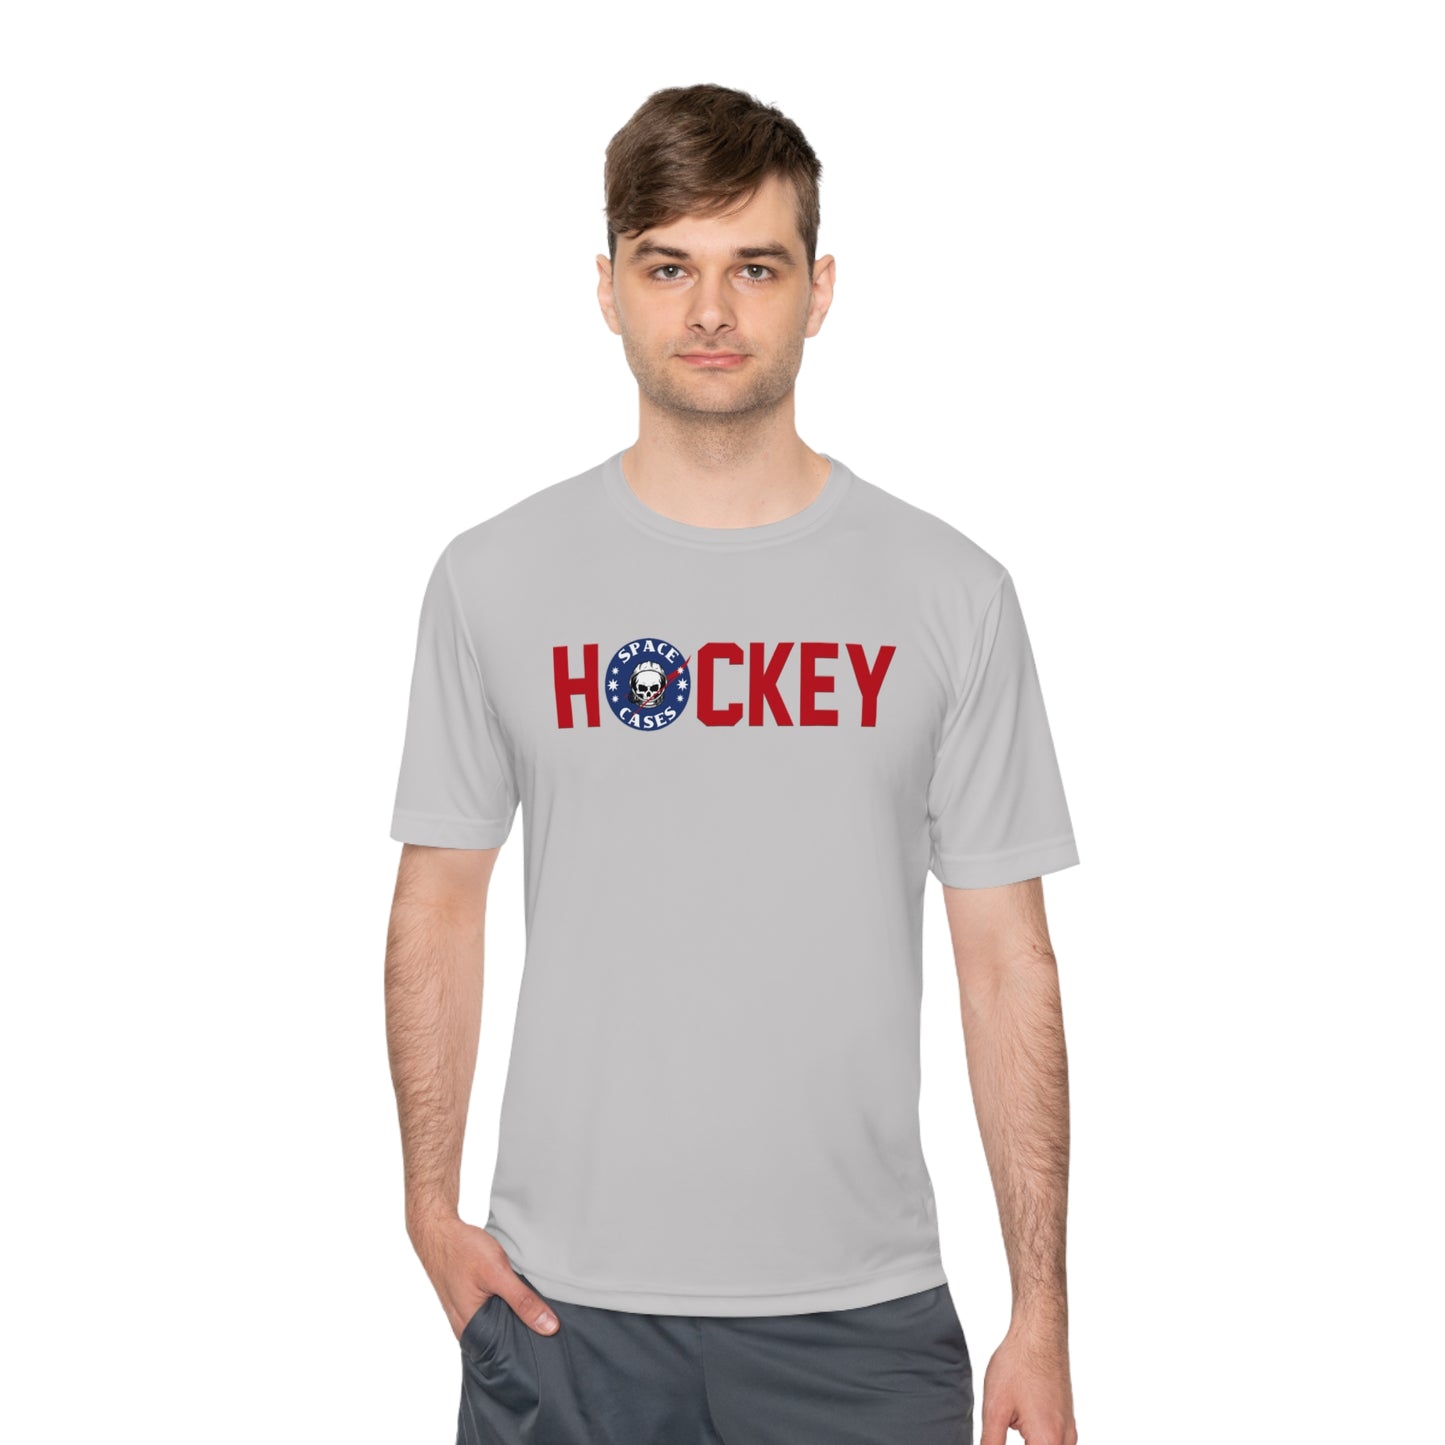 HOCKEY T-Shirt